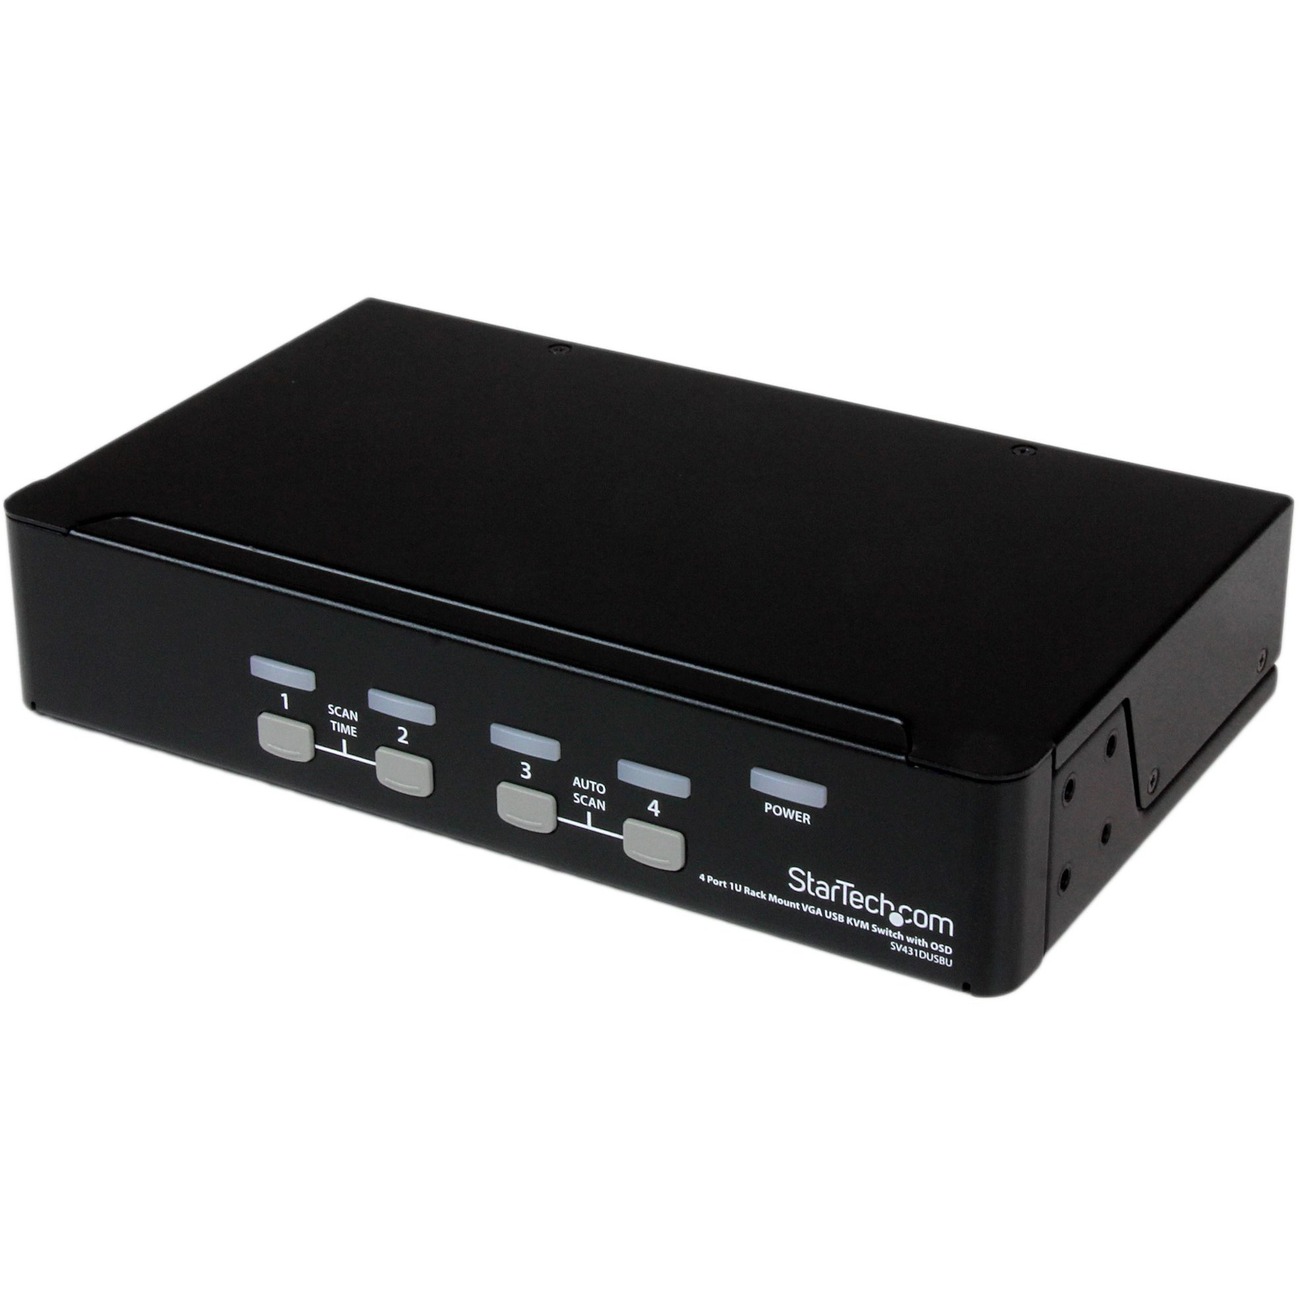 Cybex SC945DPH - KVM / audio / USB switch - 4 ports - SC945DPH-400 - KVM  Switches 